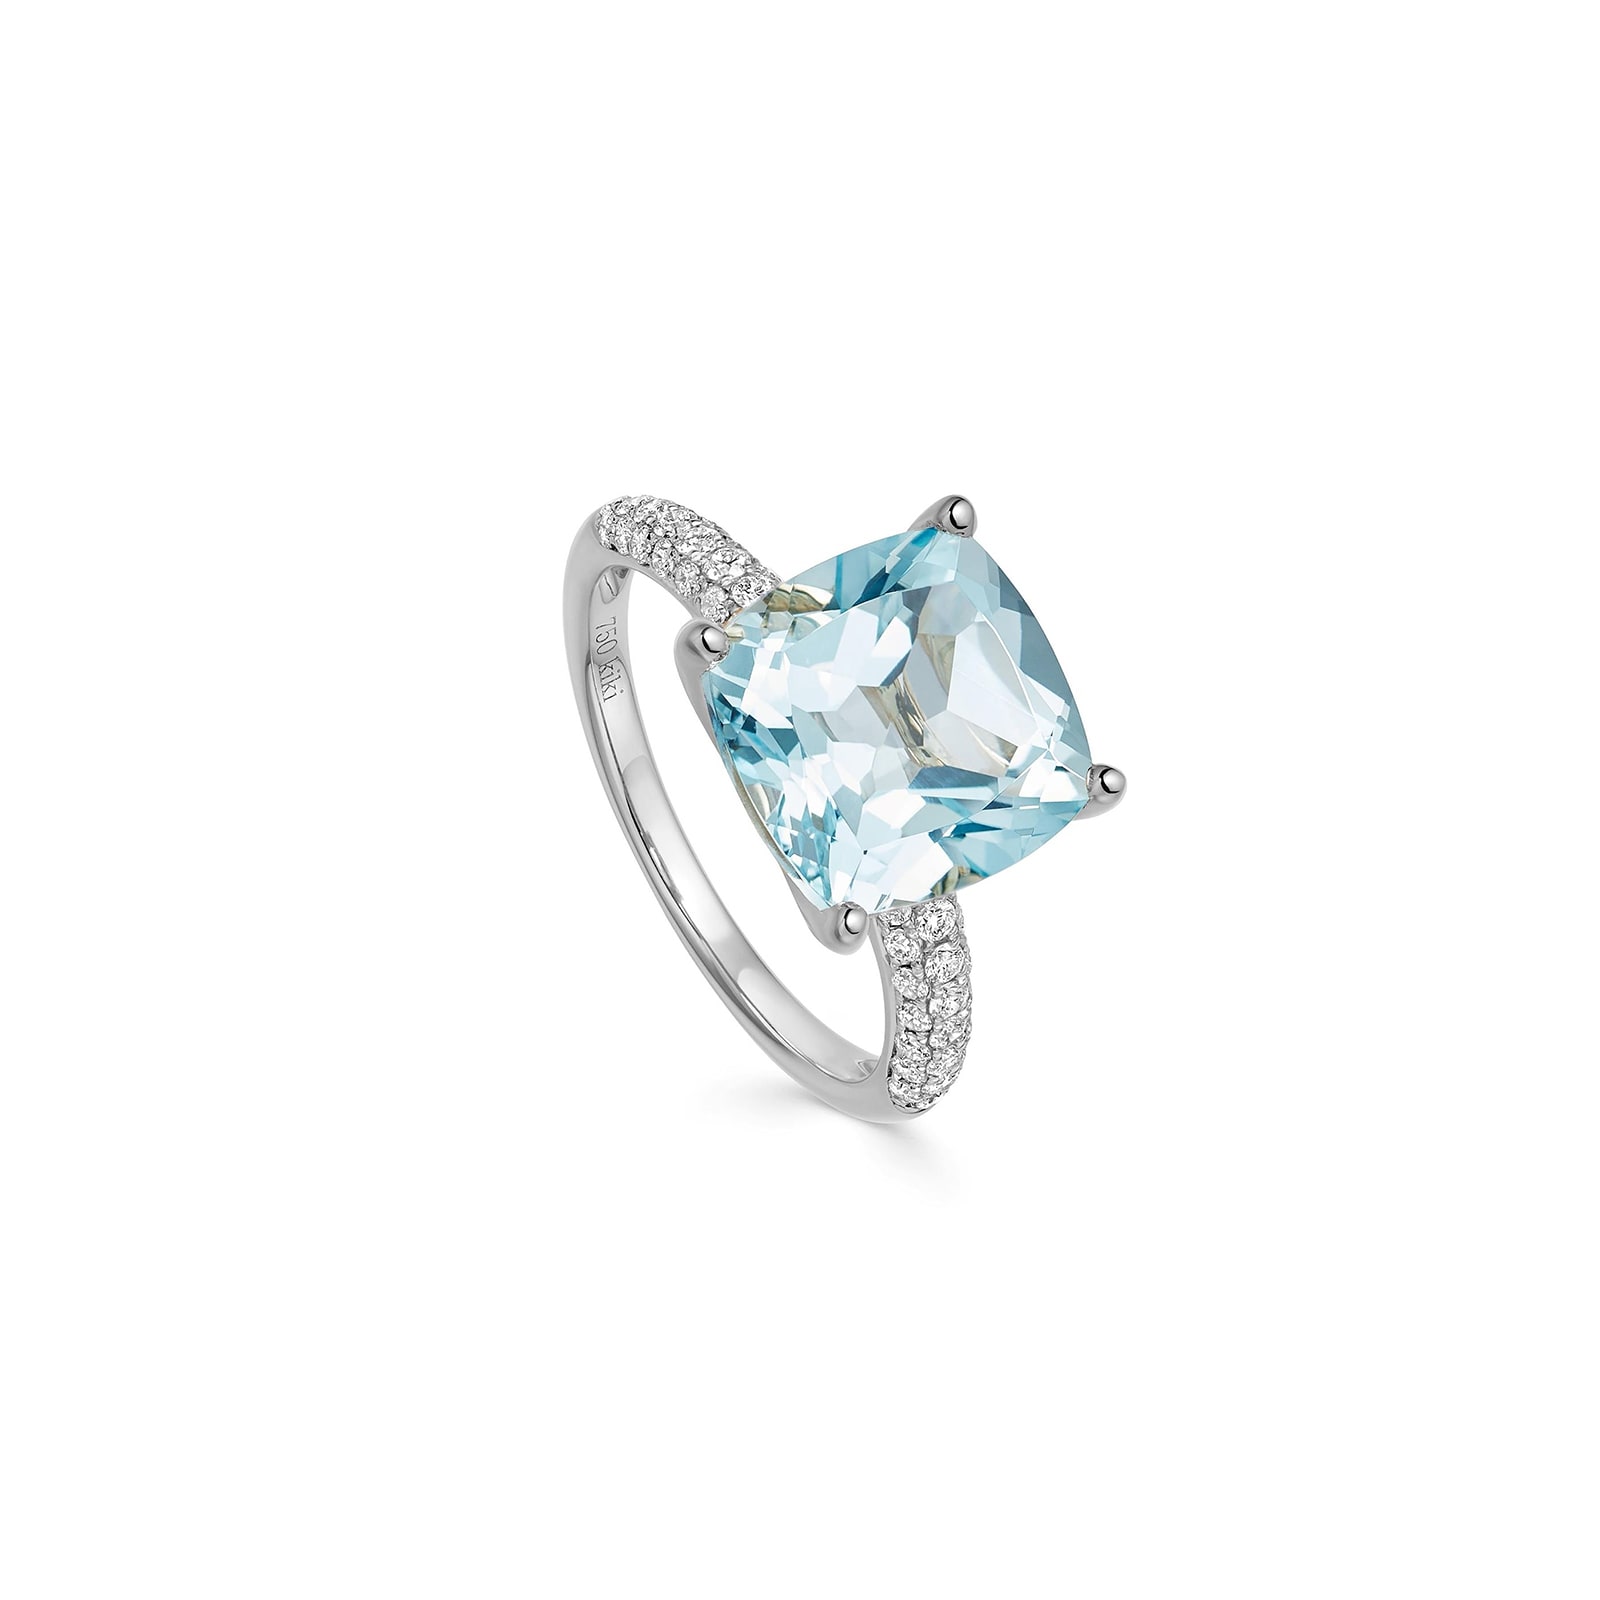 Kiki Cushion 18ct White Gold Diamond & Blue Topaz Ring - Ring Size K